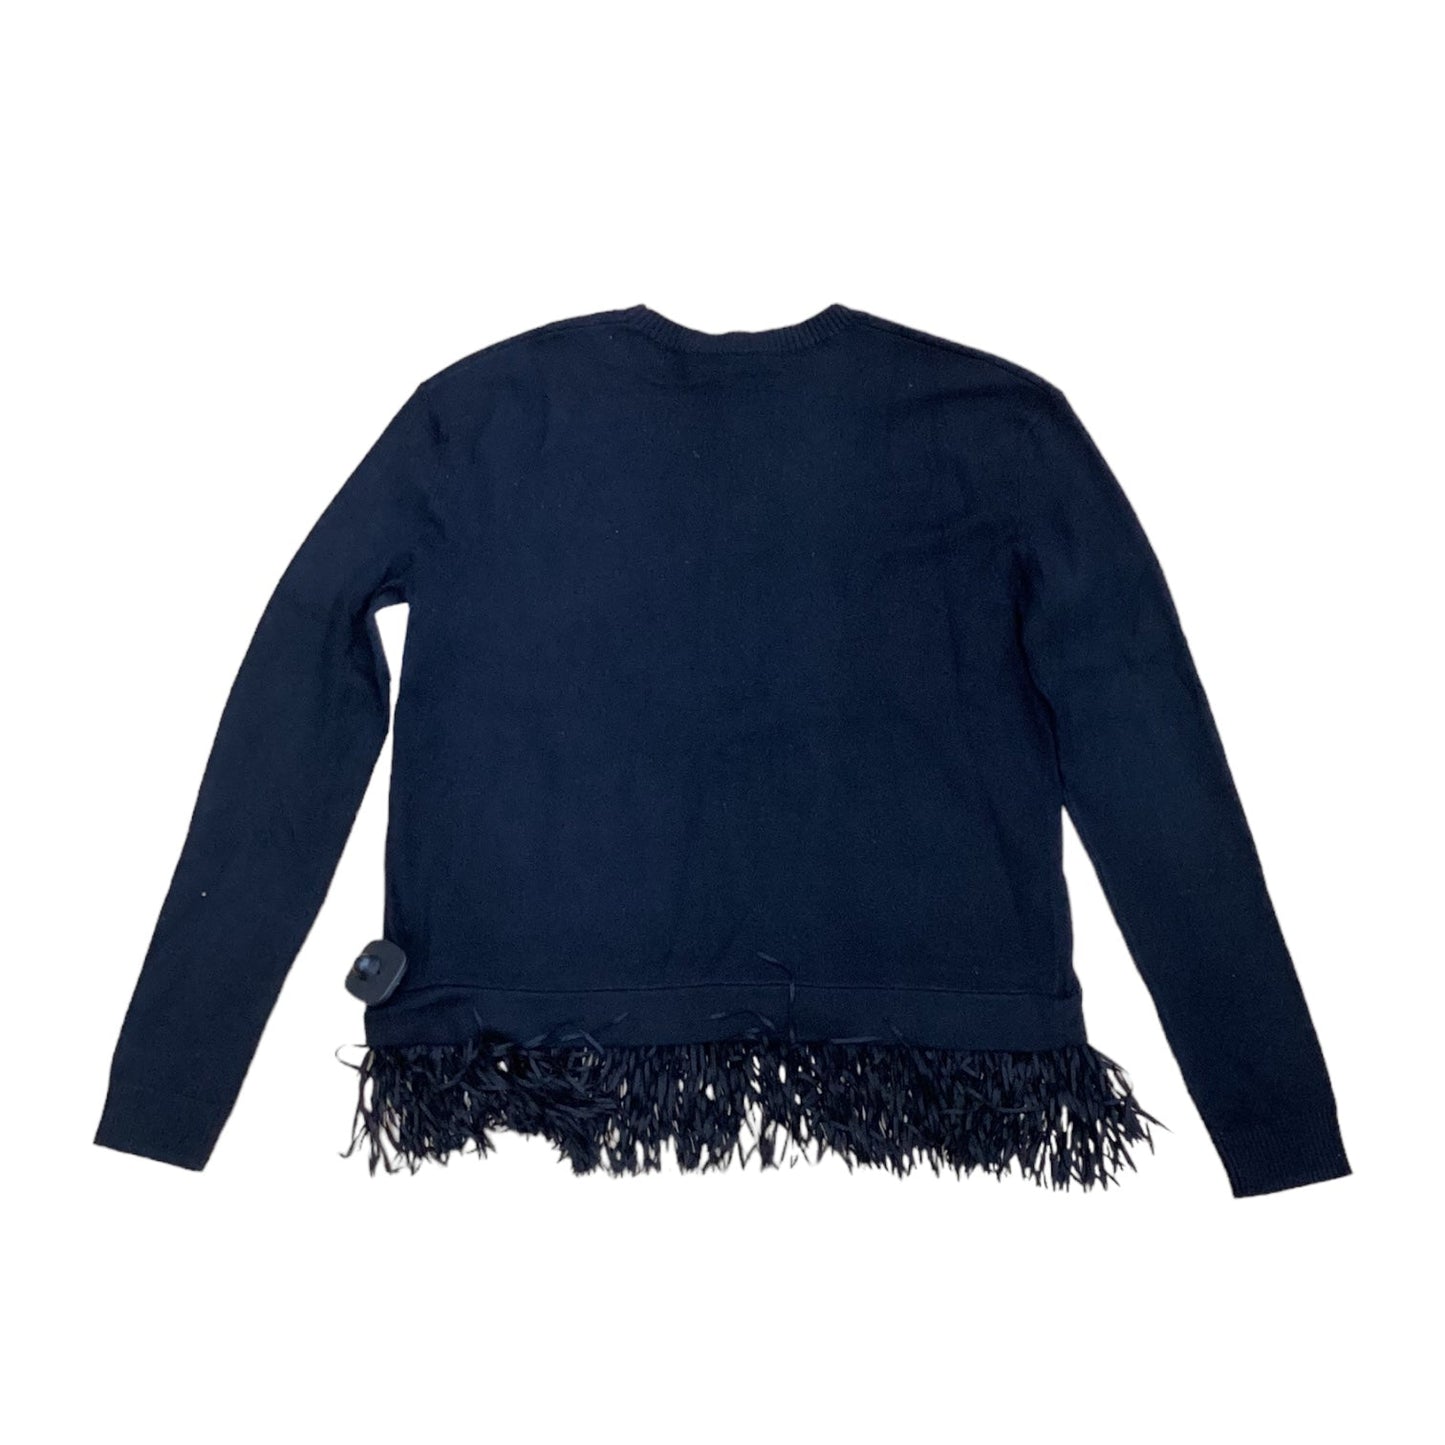 Black Sweater Designer Lilly Pulitzer, Size Xxs